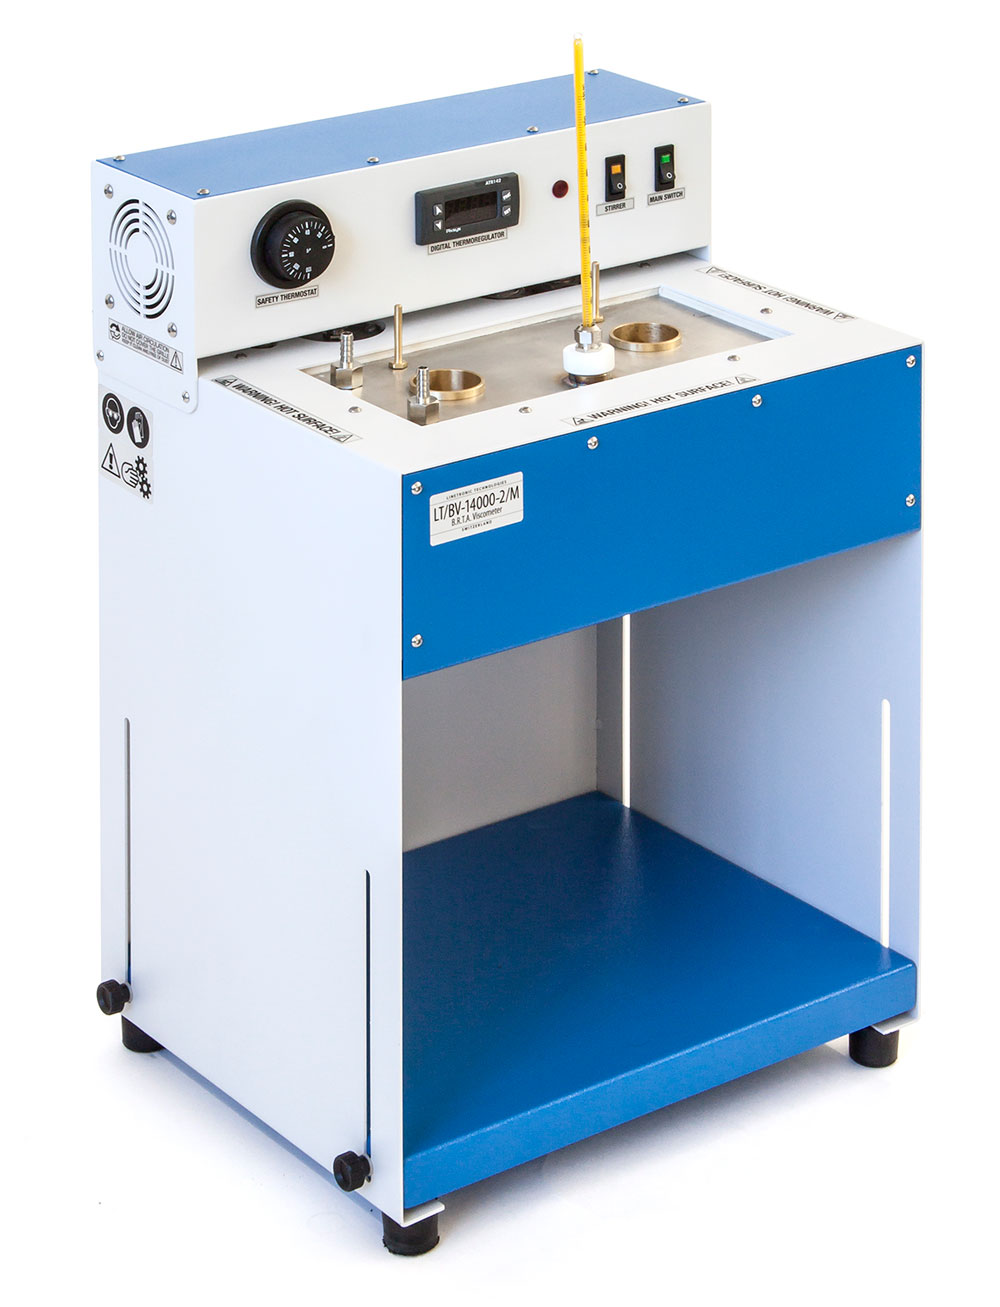 LT/BV-14000-2/M: Viscosimetro B.R.T.A.